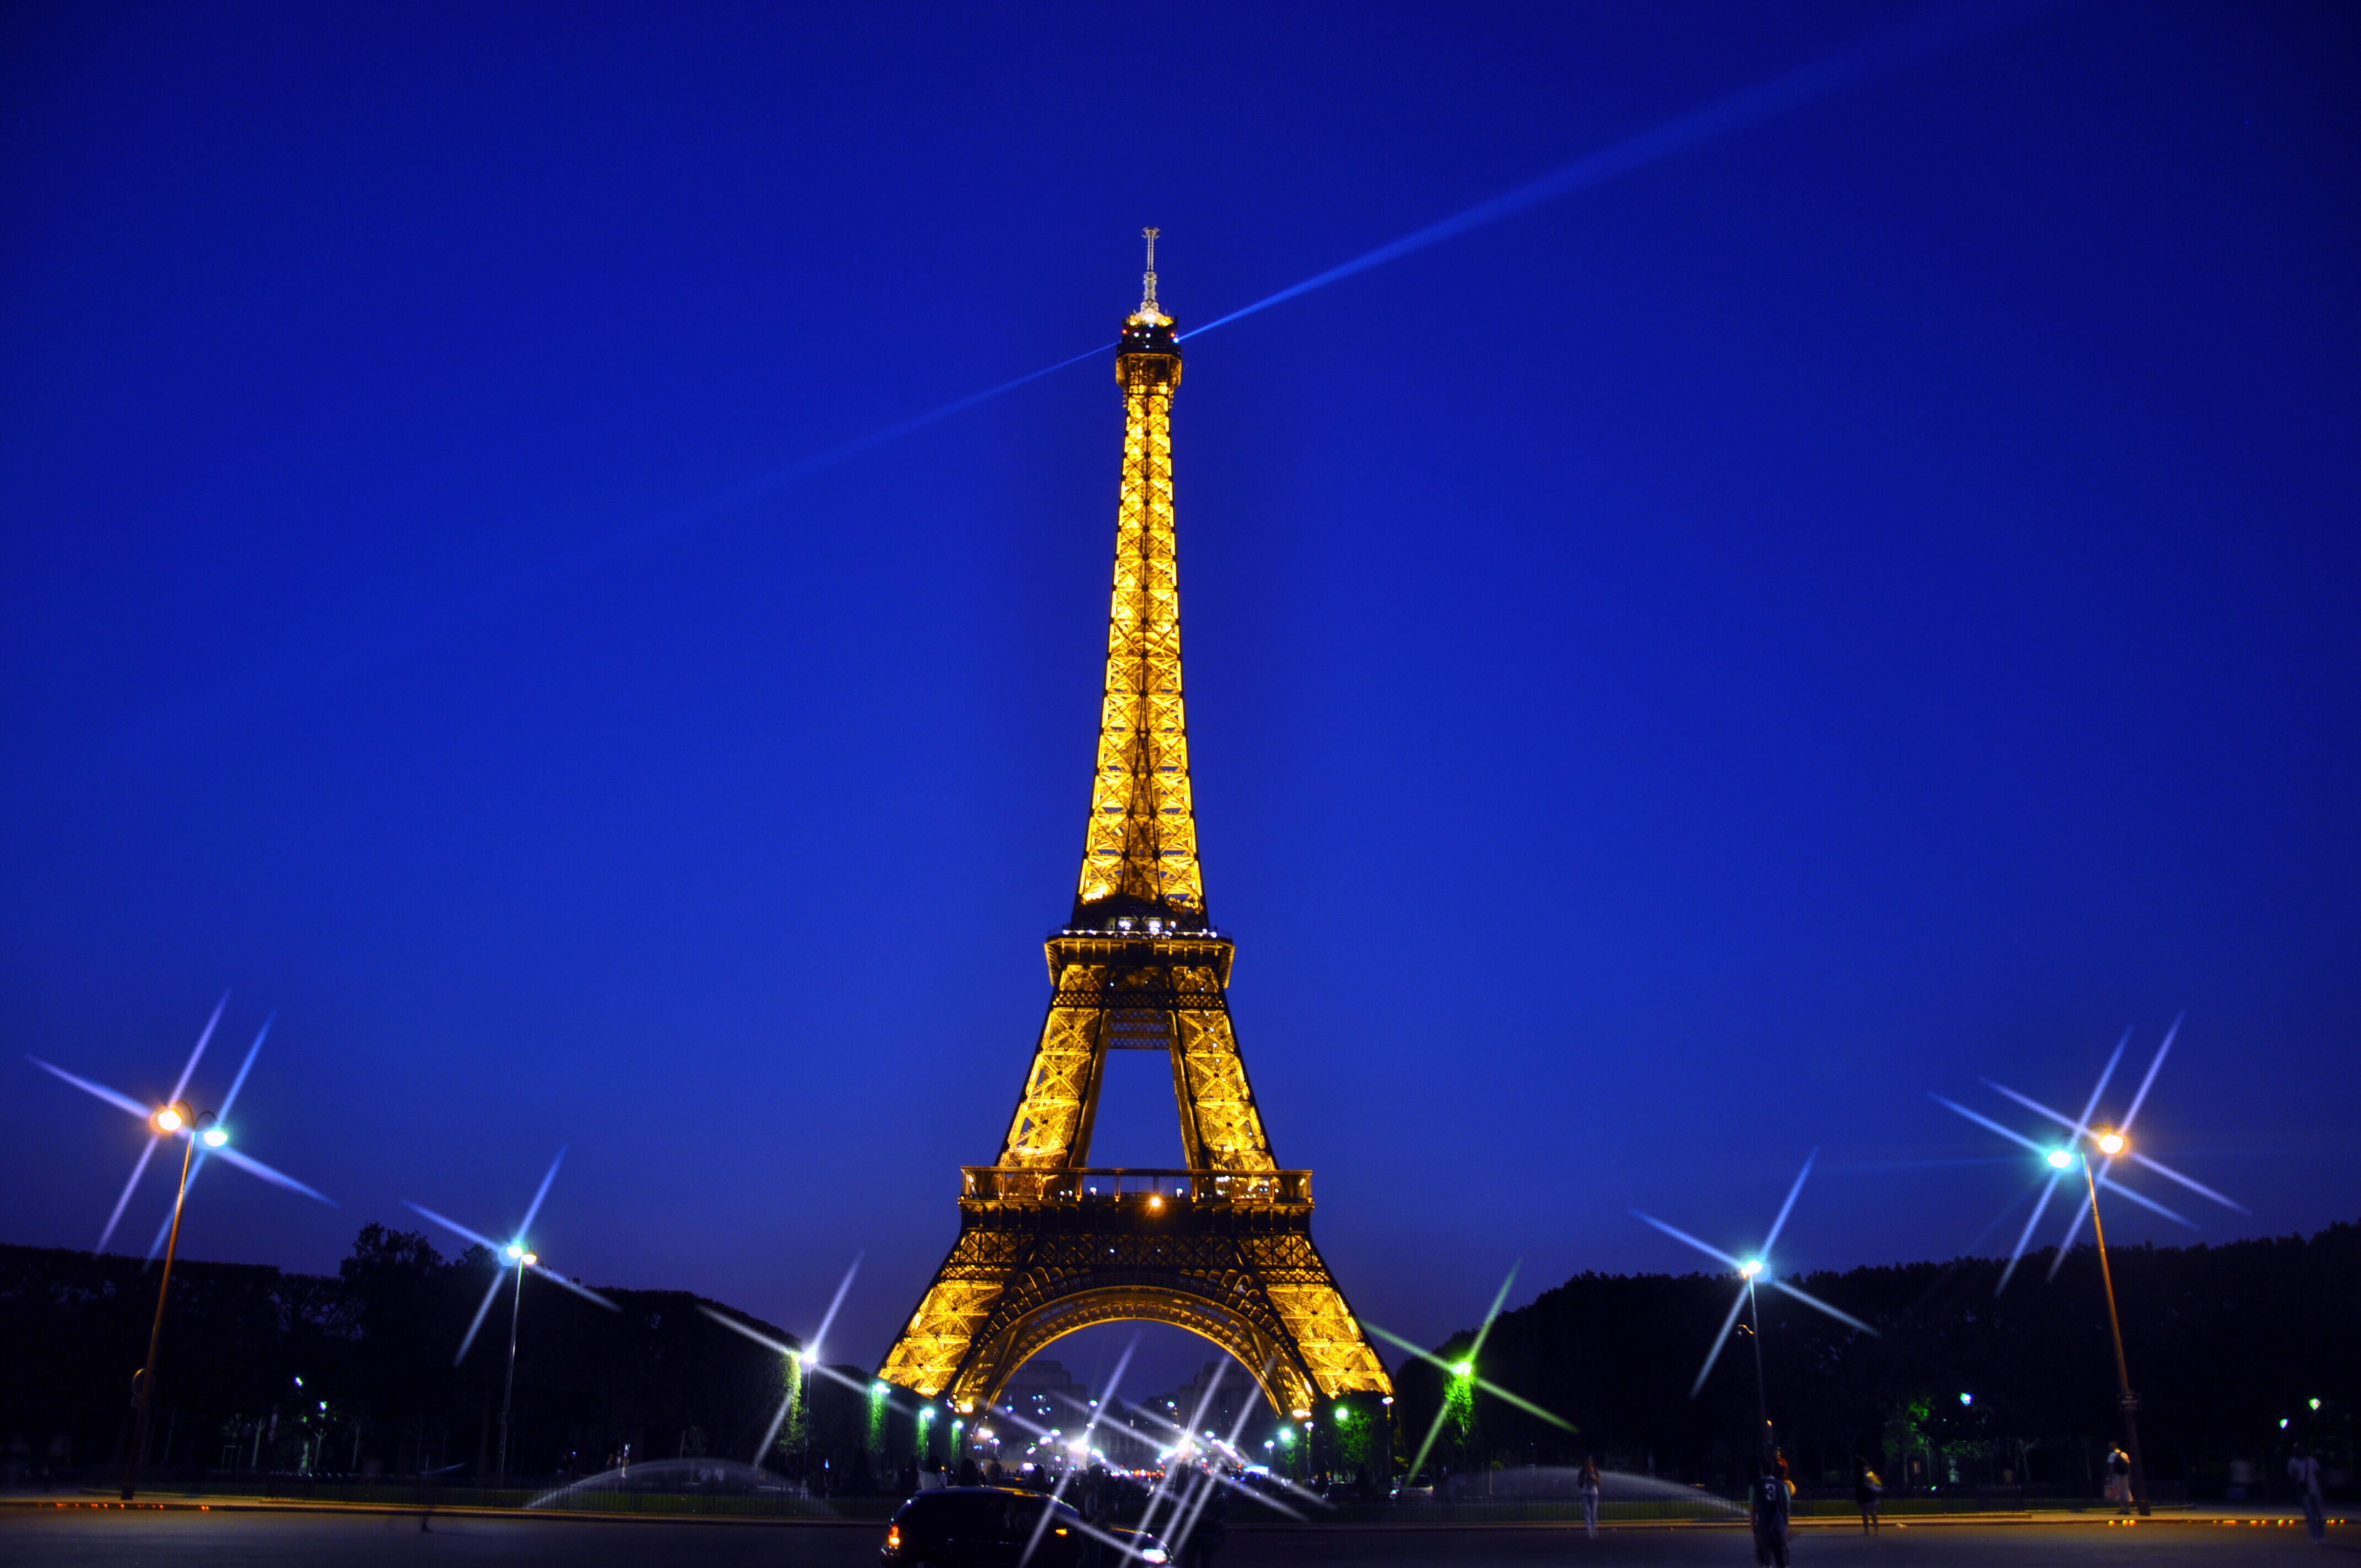 Glowing Eiffel tower at night